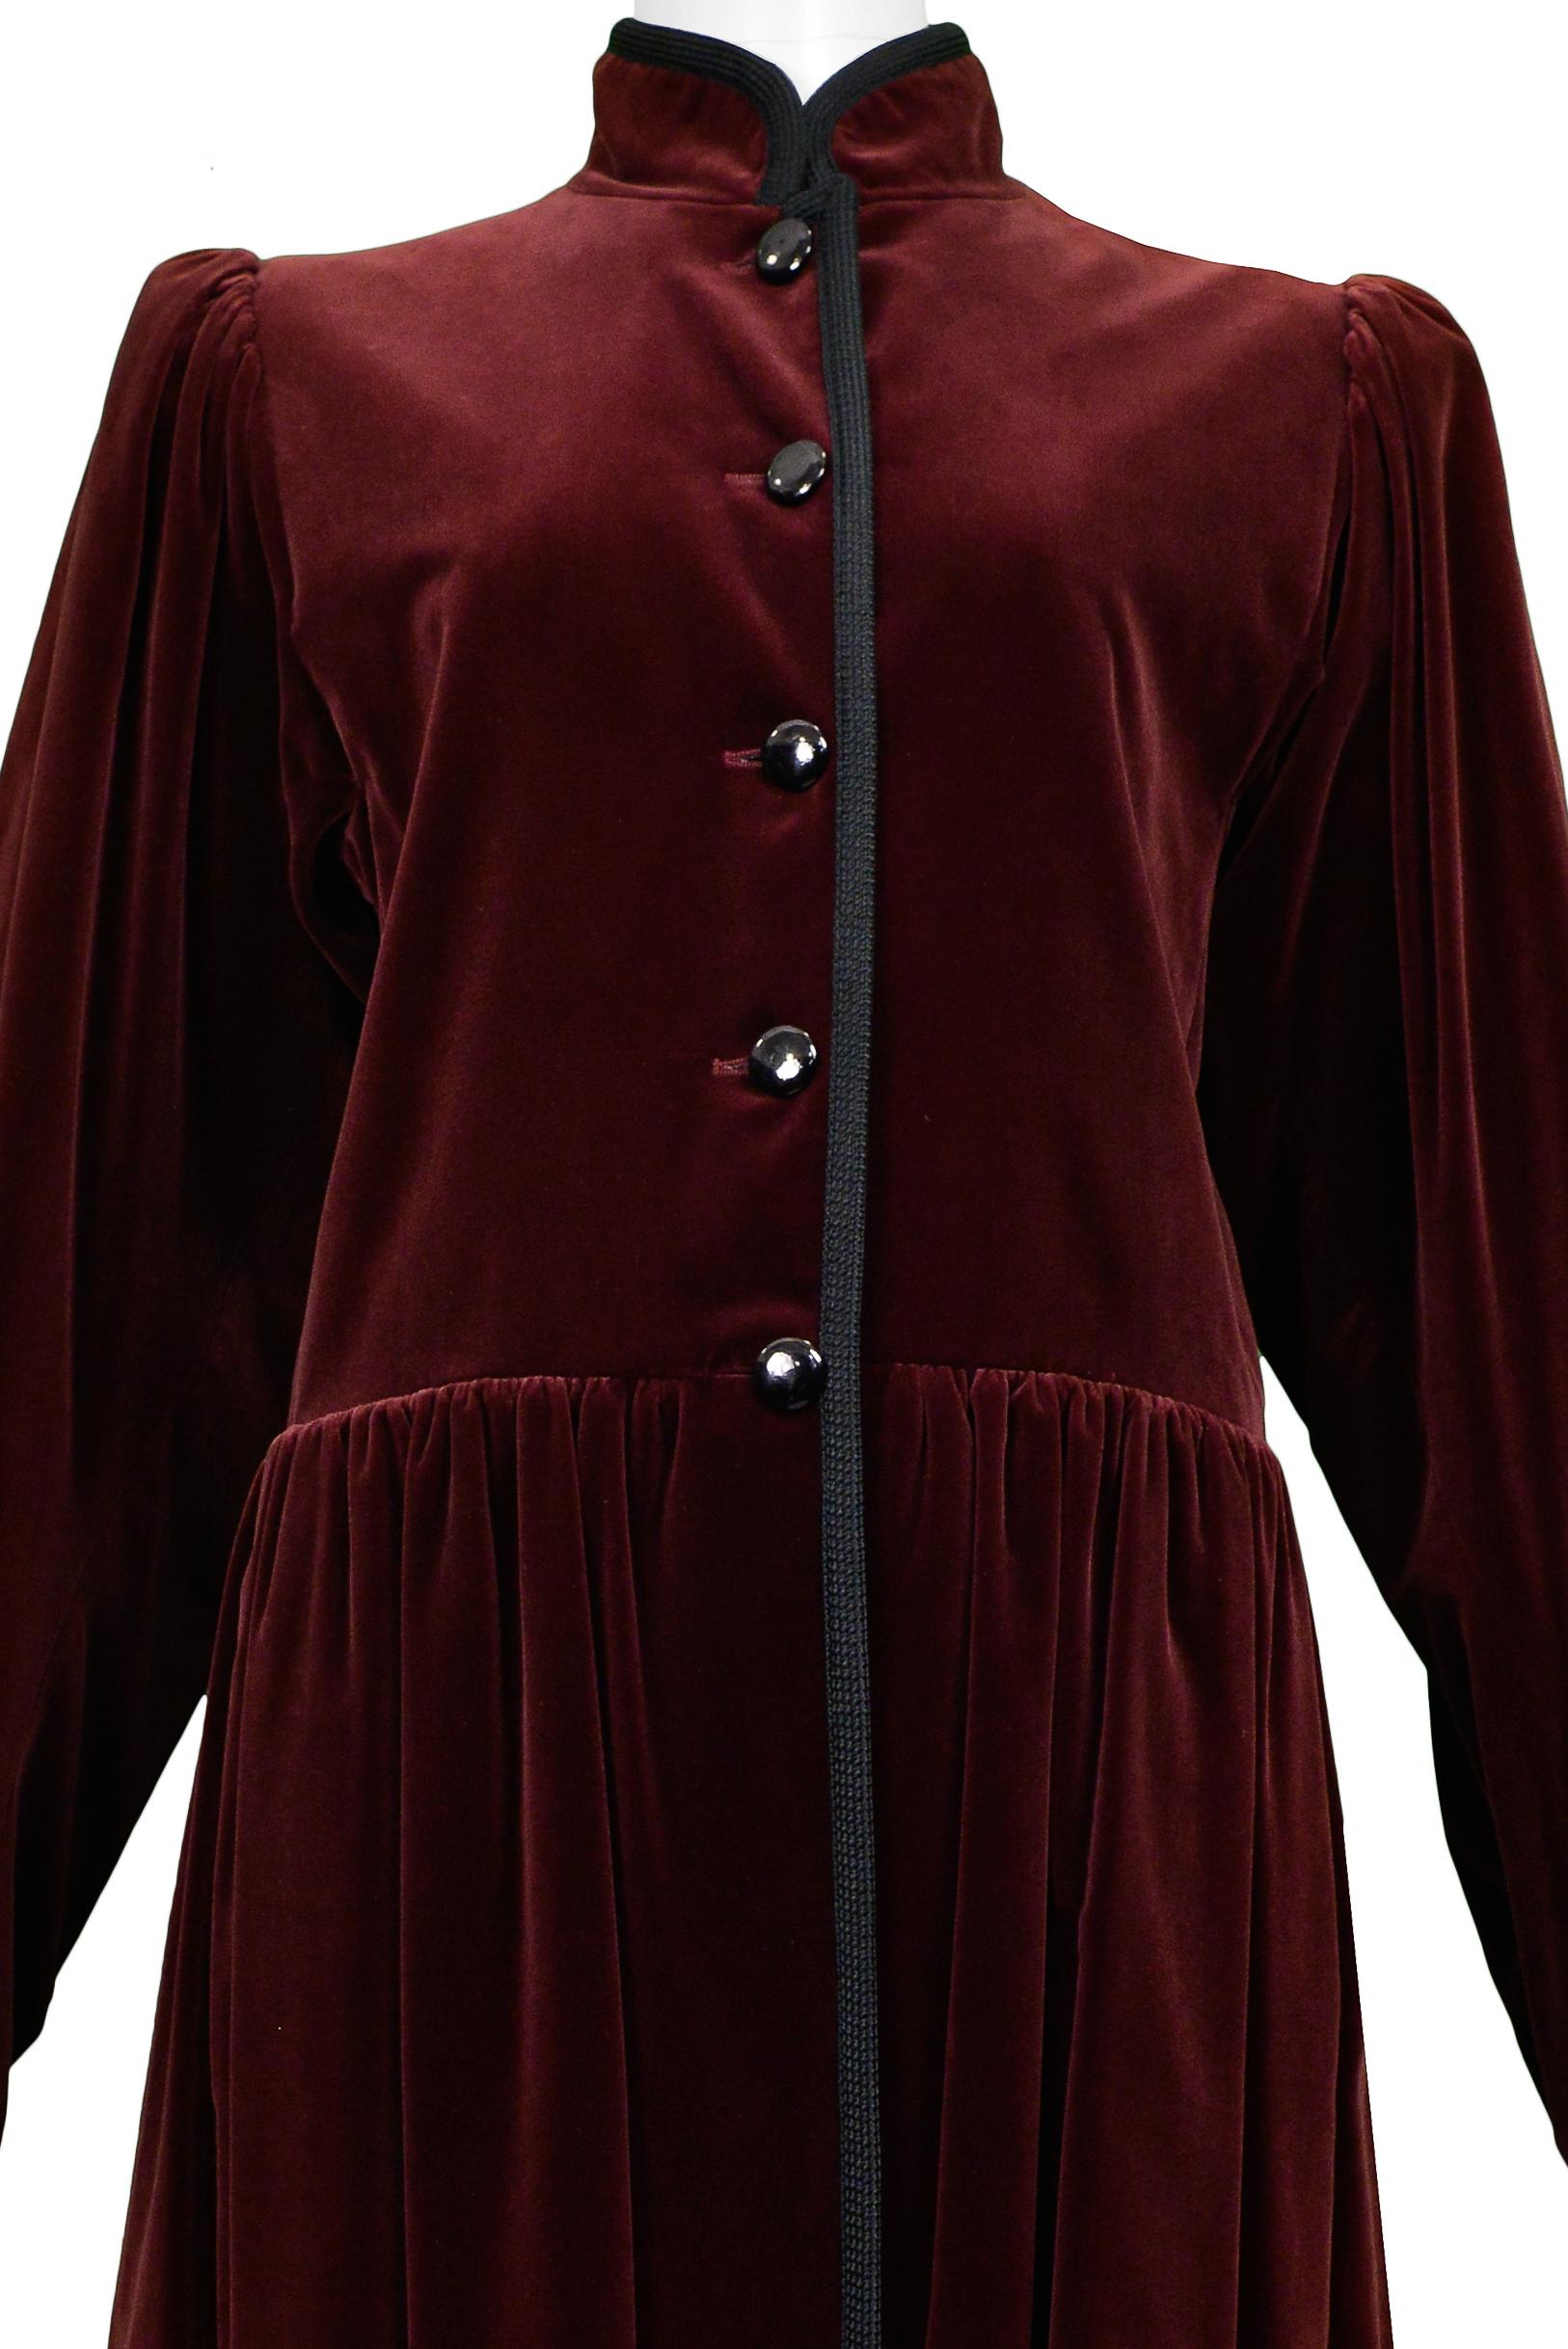 burgundy coat dress